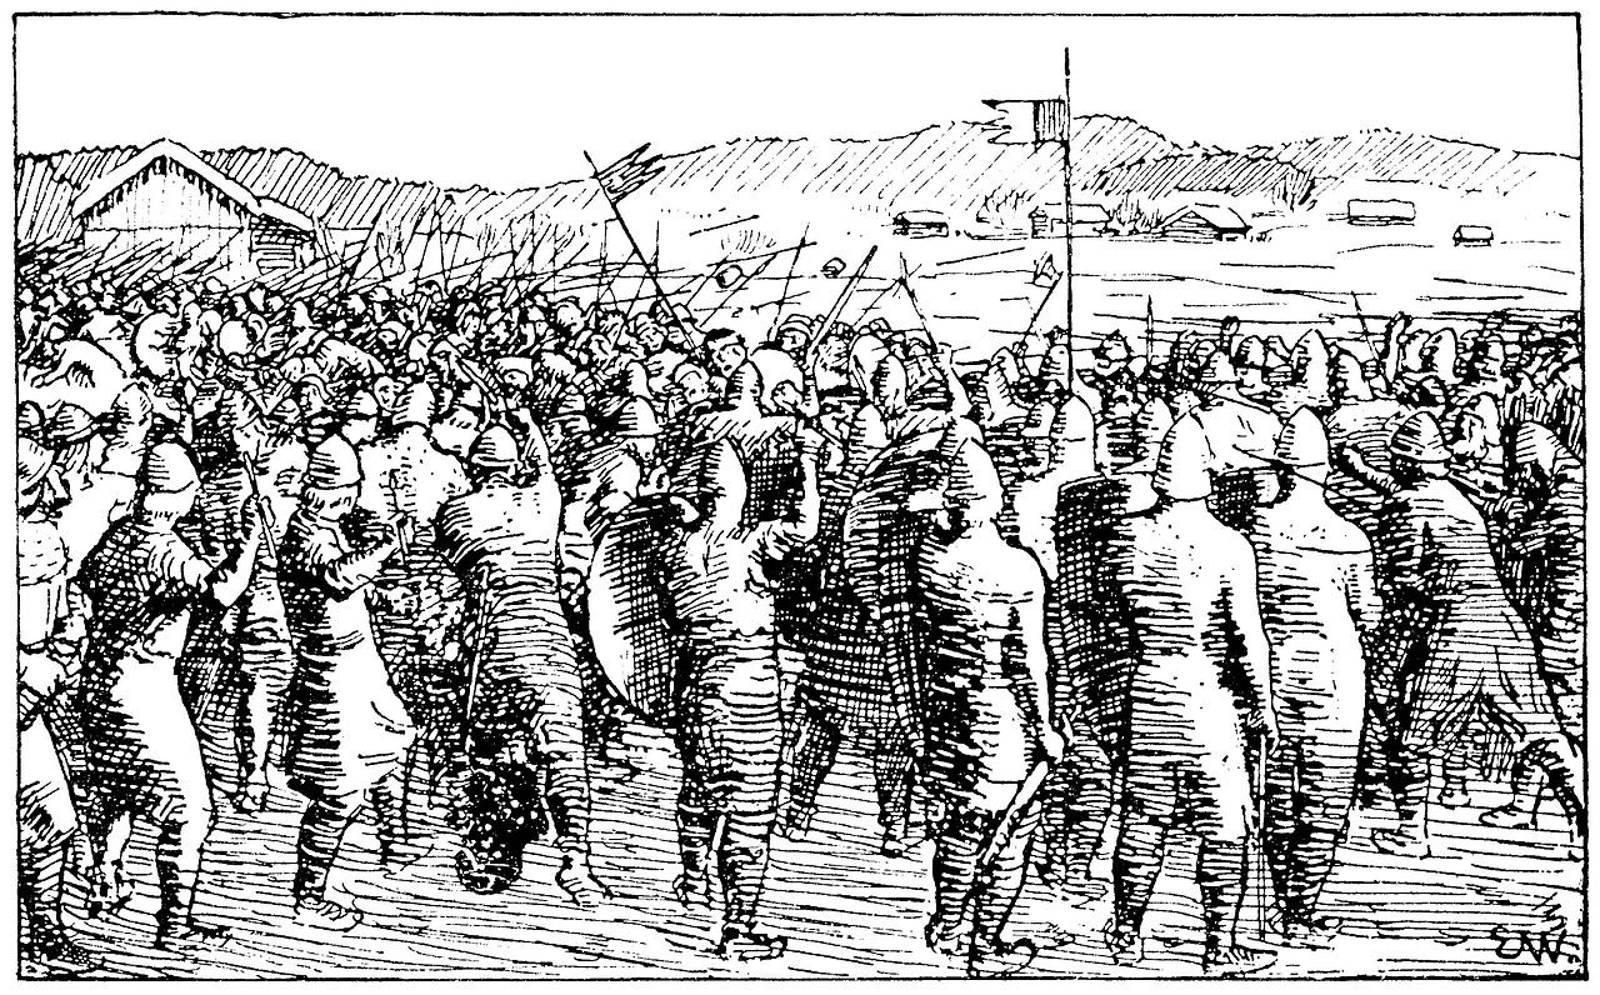 Birkebeinerne i slaget på Re i 1177. Her led de blodig nederlag for Magnus Erlingssons styrker. De overlevende flyktet til Värmland. Illustrasjon: Eirik Werenskiold.